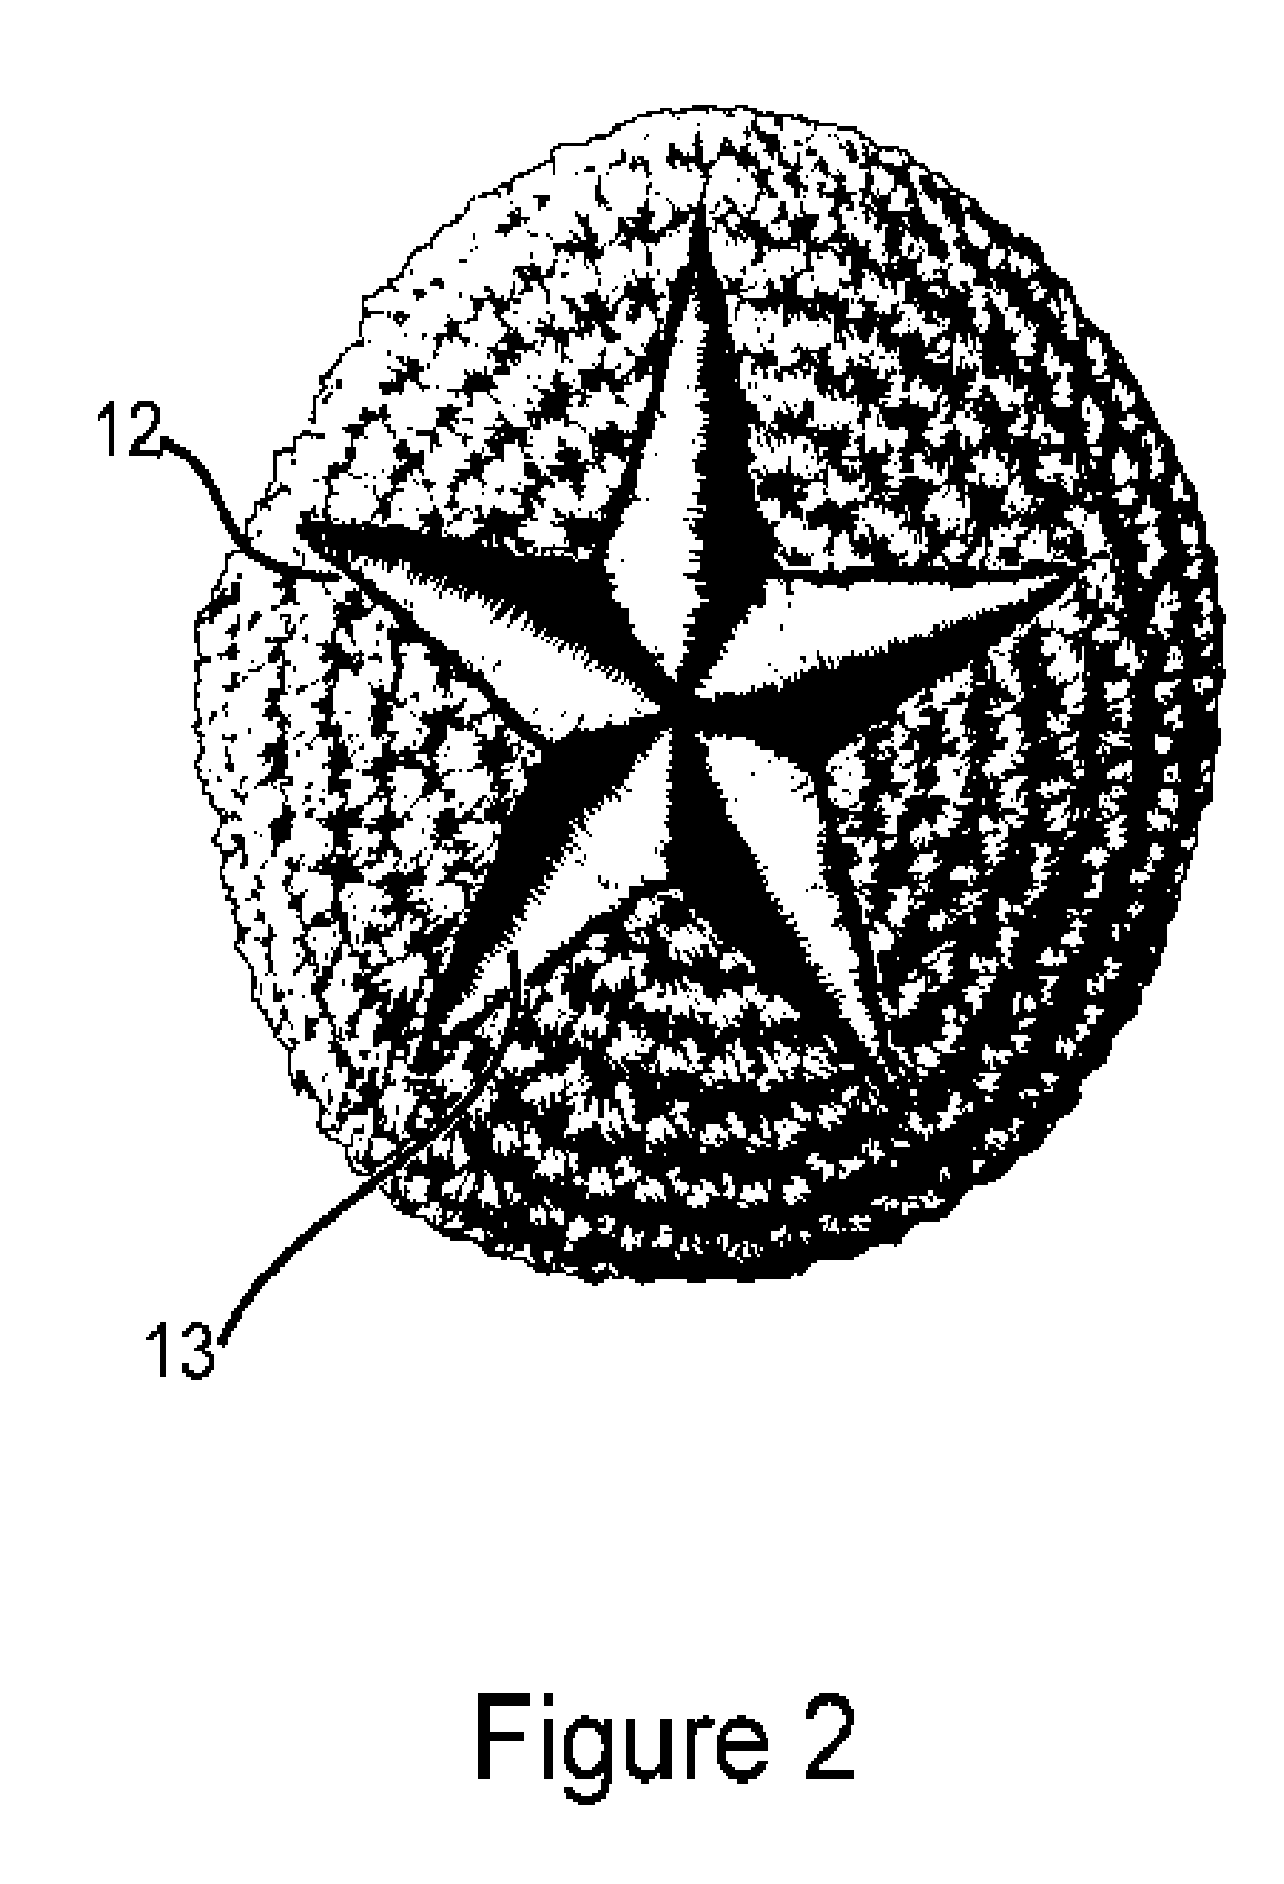 Spherical crocheted object